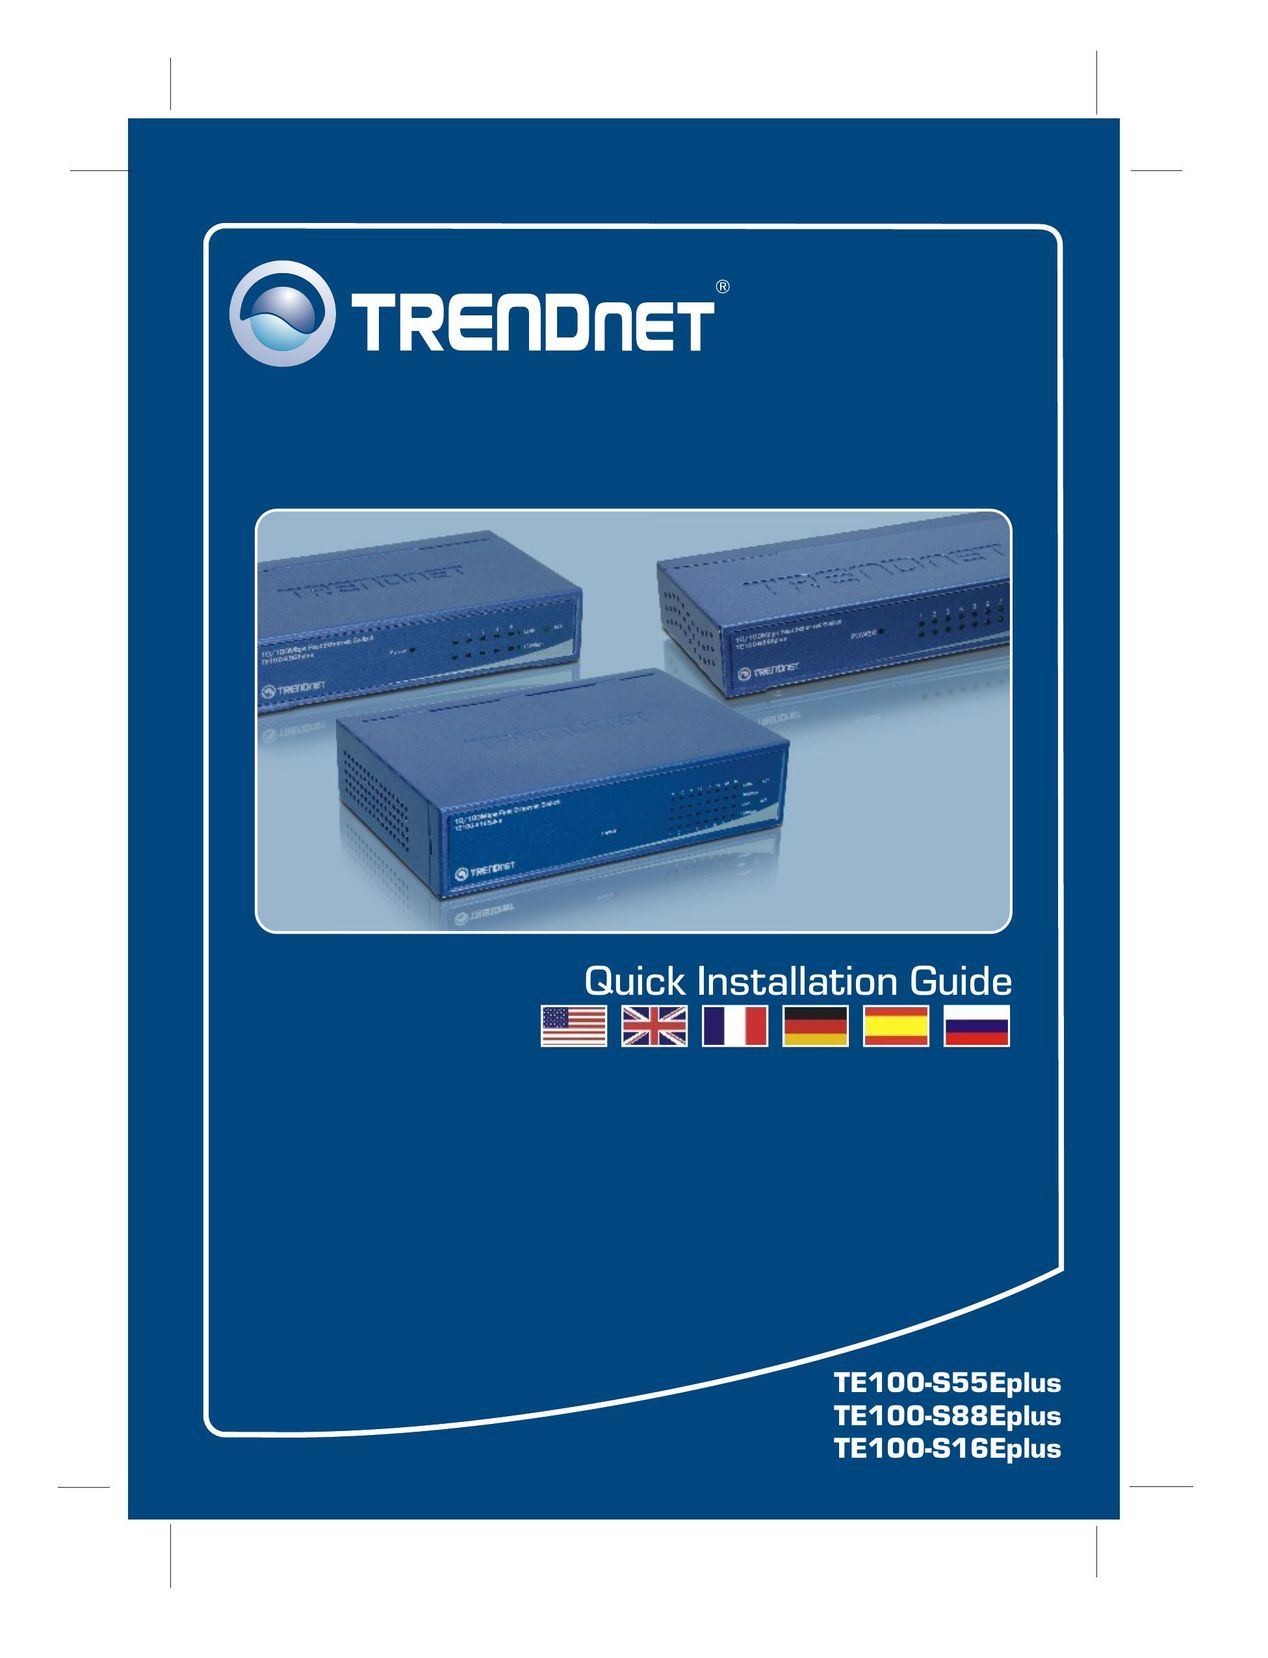 TRENDnet S55Eplus Switch User Manual